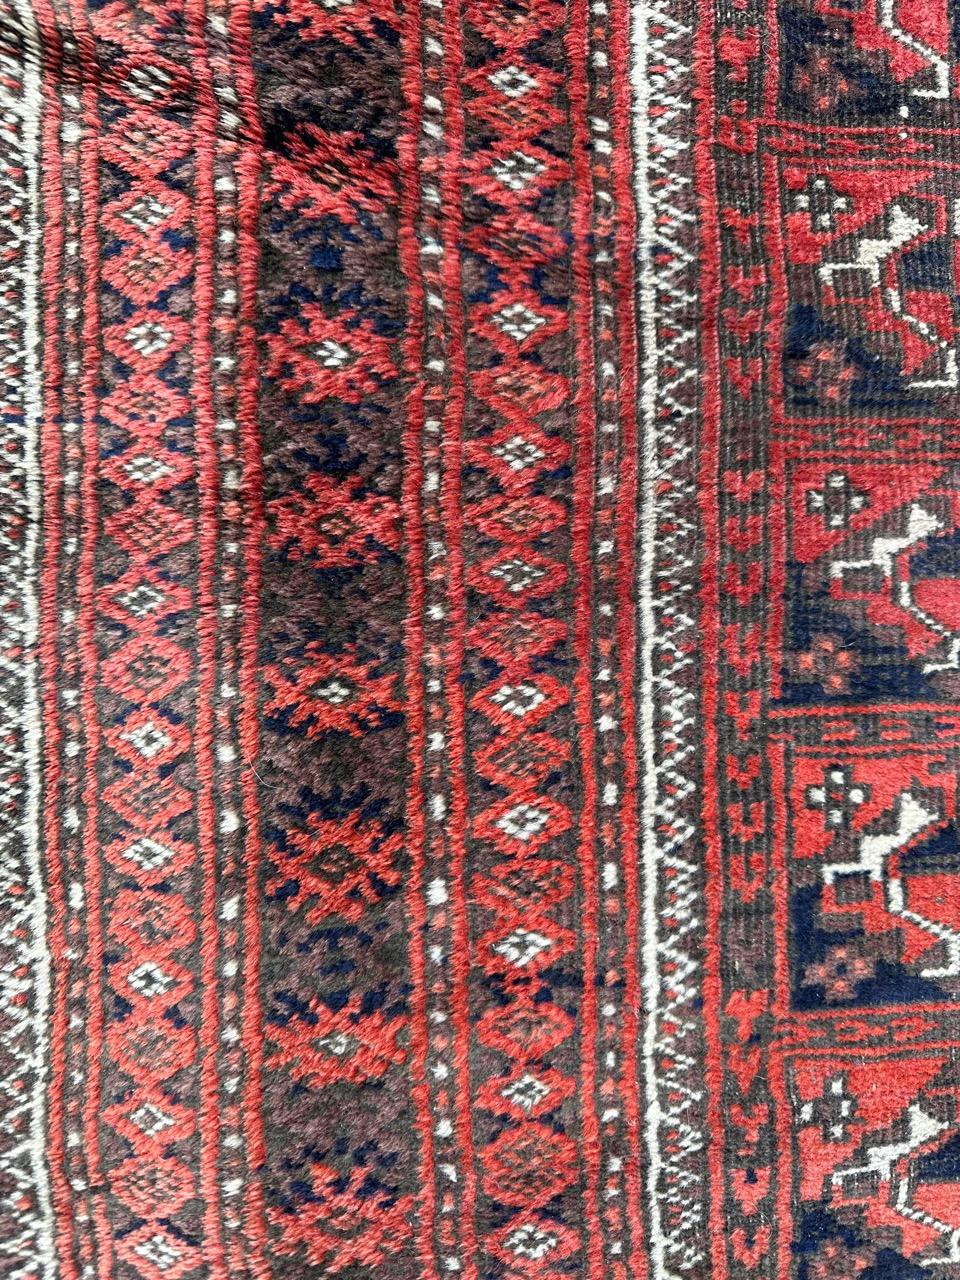 Wool Bobyrug’s nice antique distressed Turkmen rug For Sale